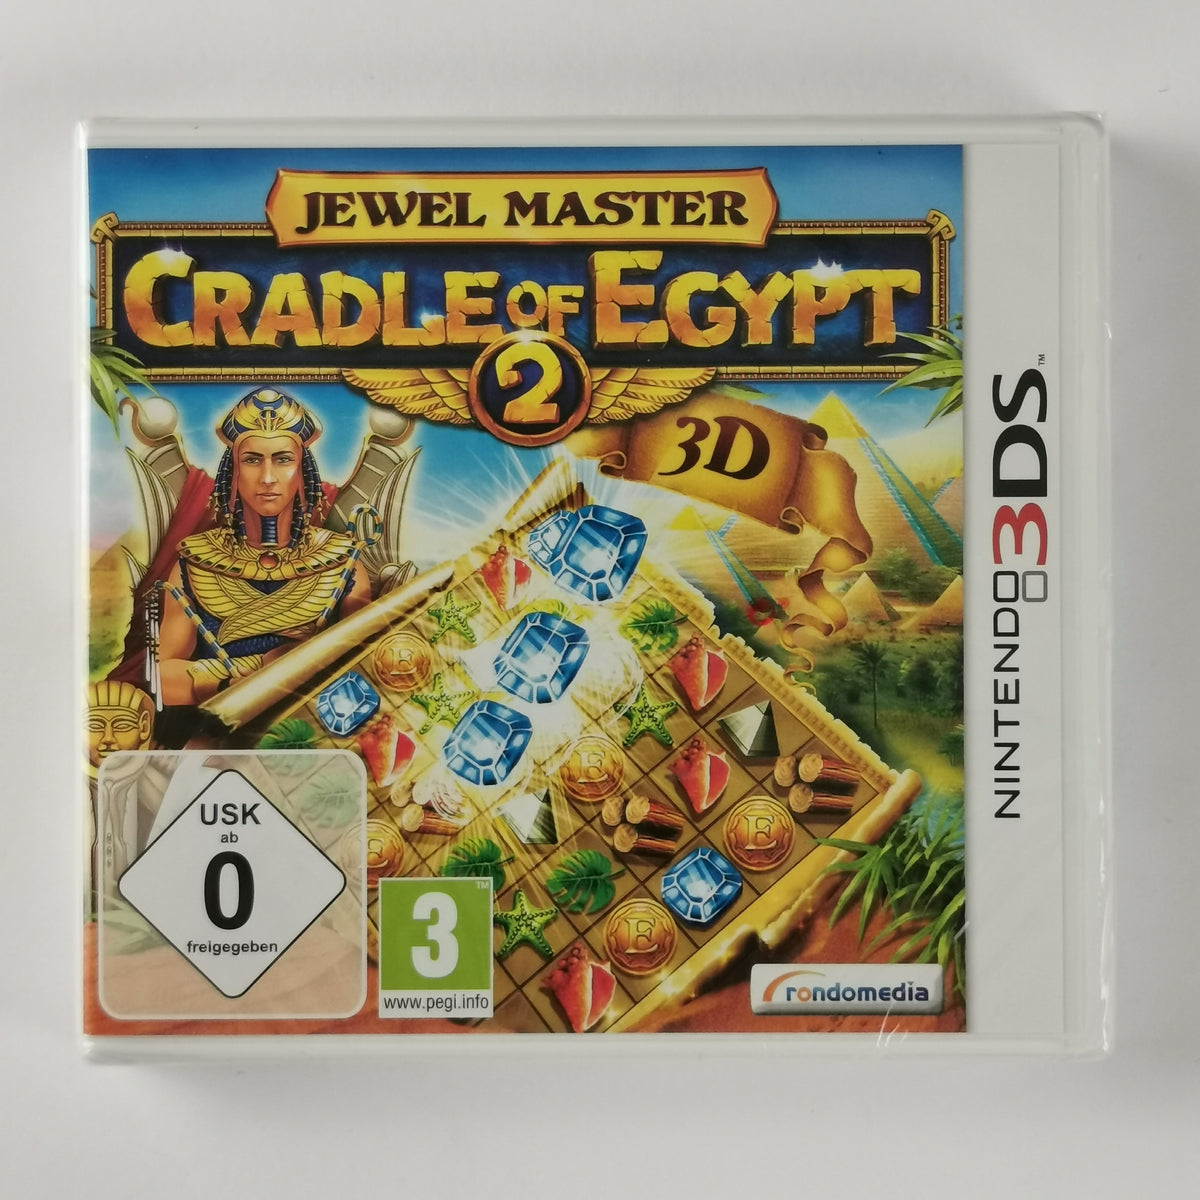 Jewel Master   Cradle of Egypt 2  [3DS]